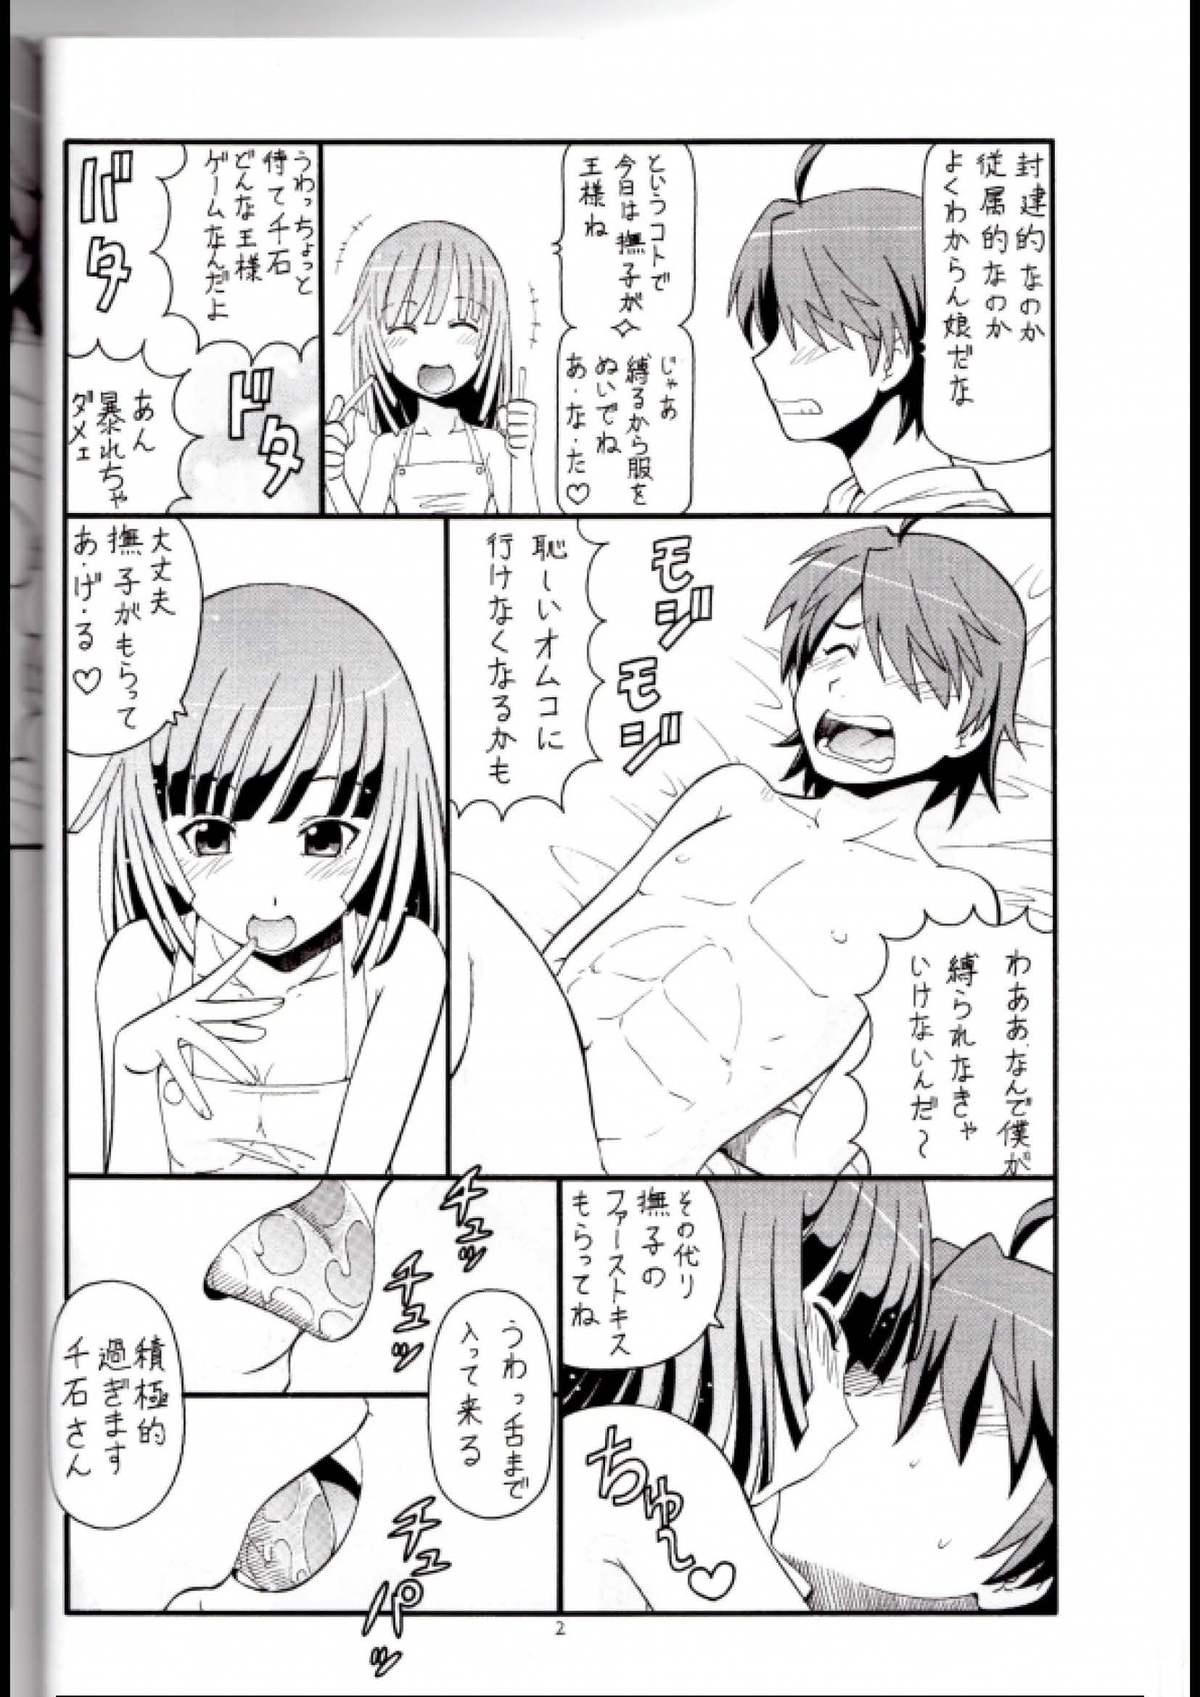 Hot Hito ni Hakanai to Kaite "Araragi" to Yomu 2&3 - Bakemonogatari Doggie Style Porn - Page 3